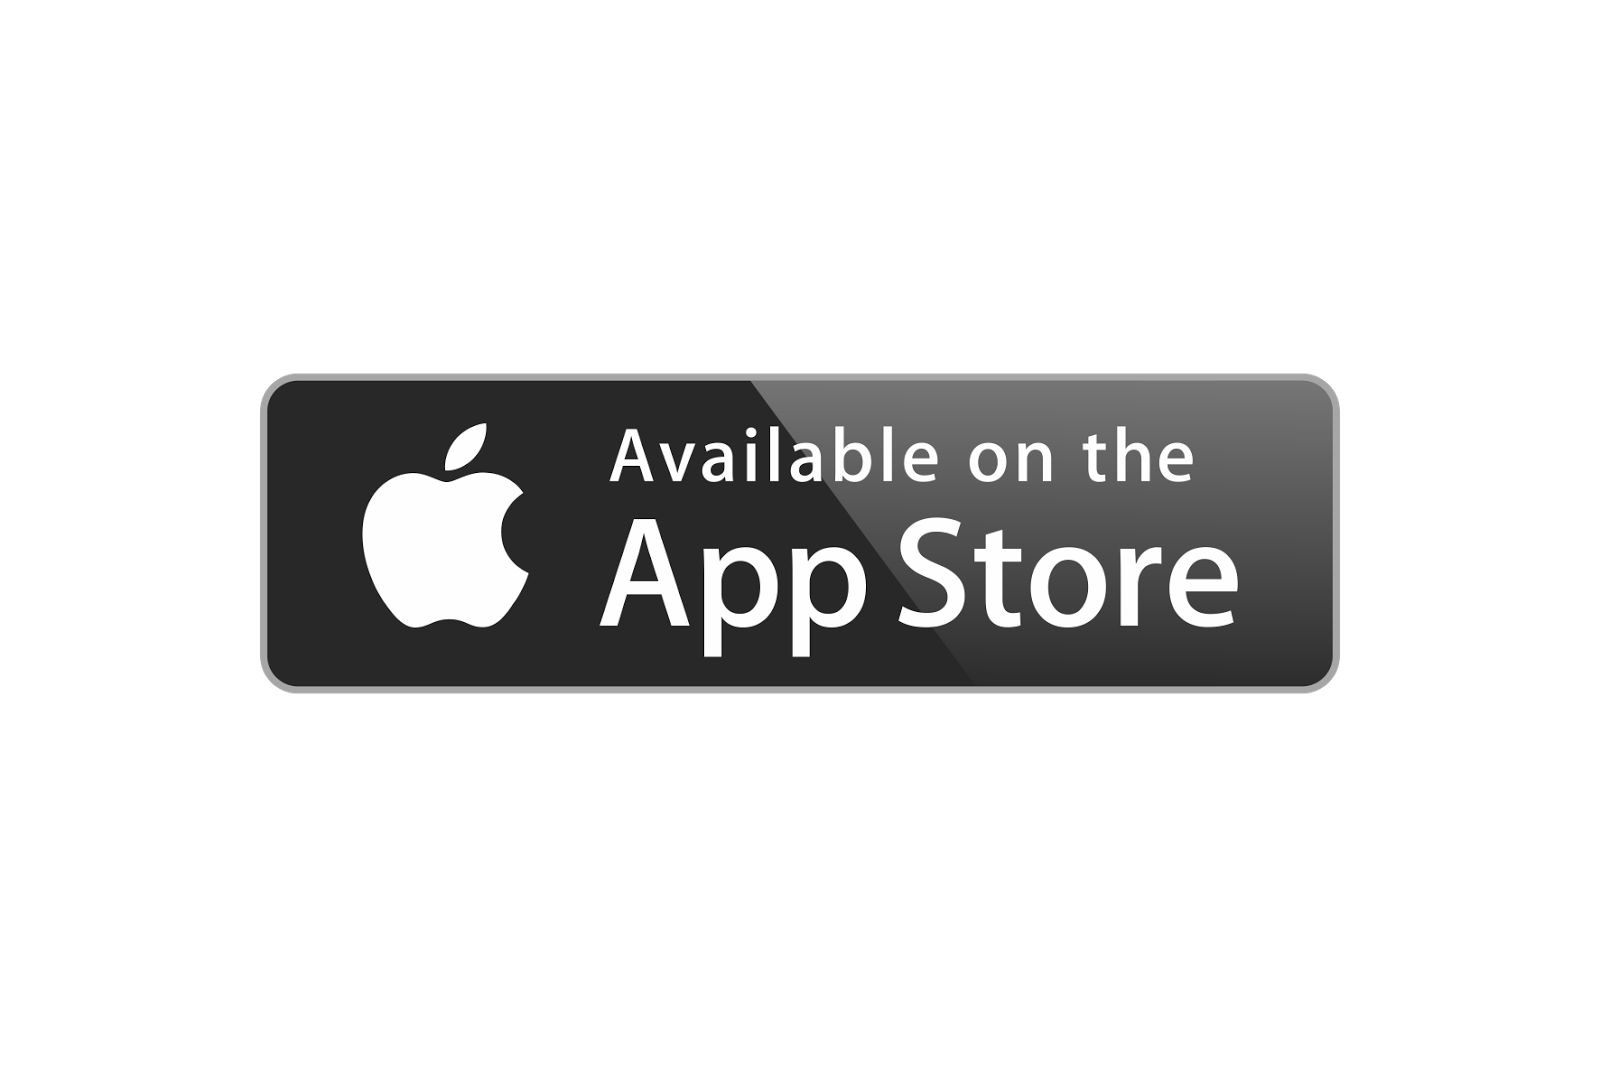 App store videos. Apple Store логотип. Загрузите в app Store. Иконка доступно в app Store. Загрузите в app Store иконка.